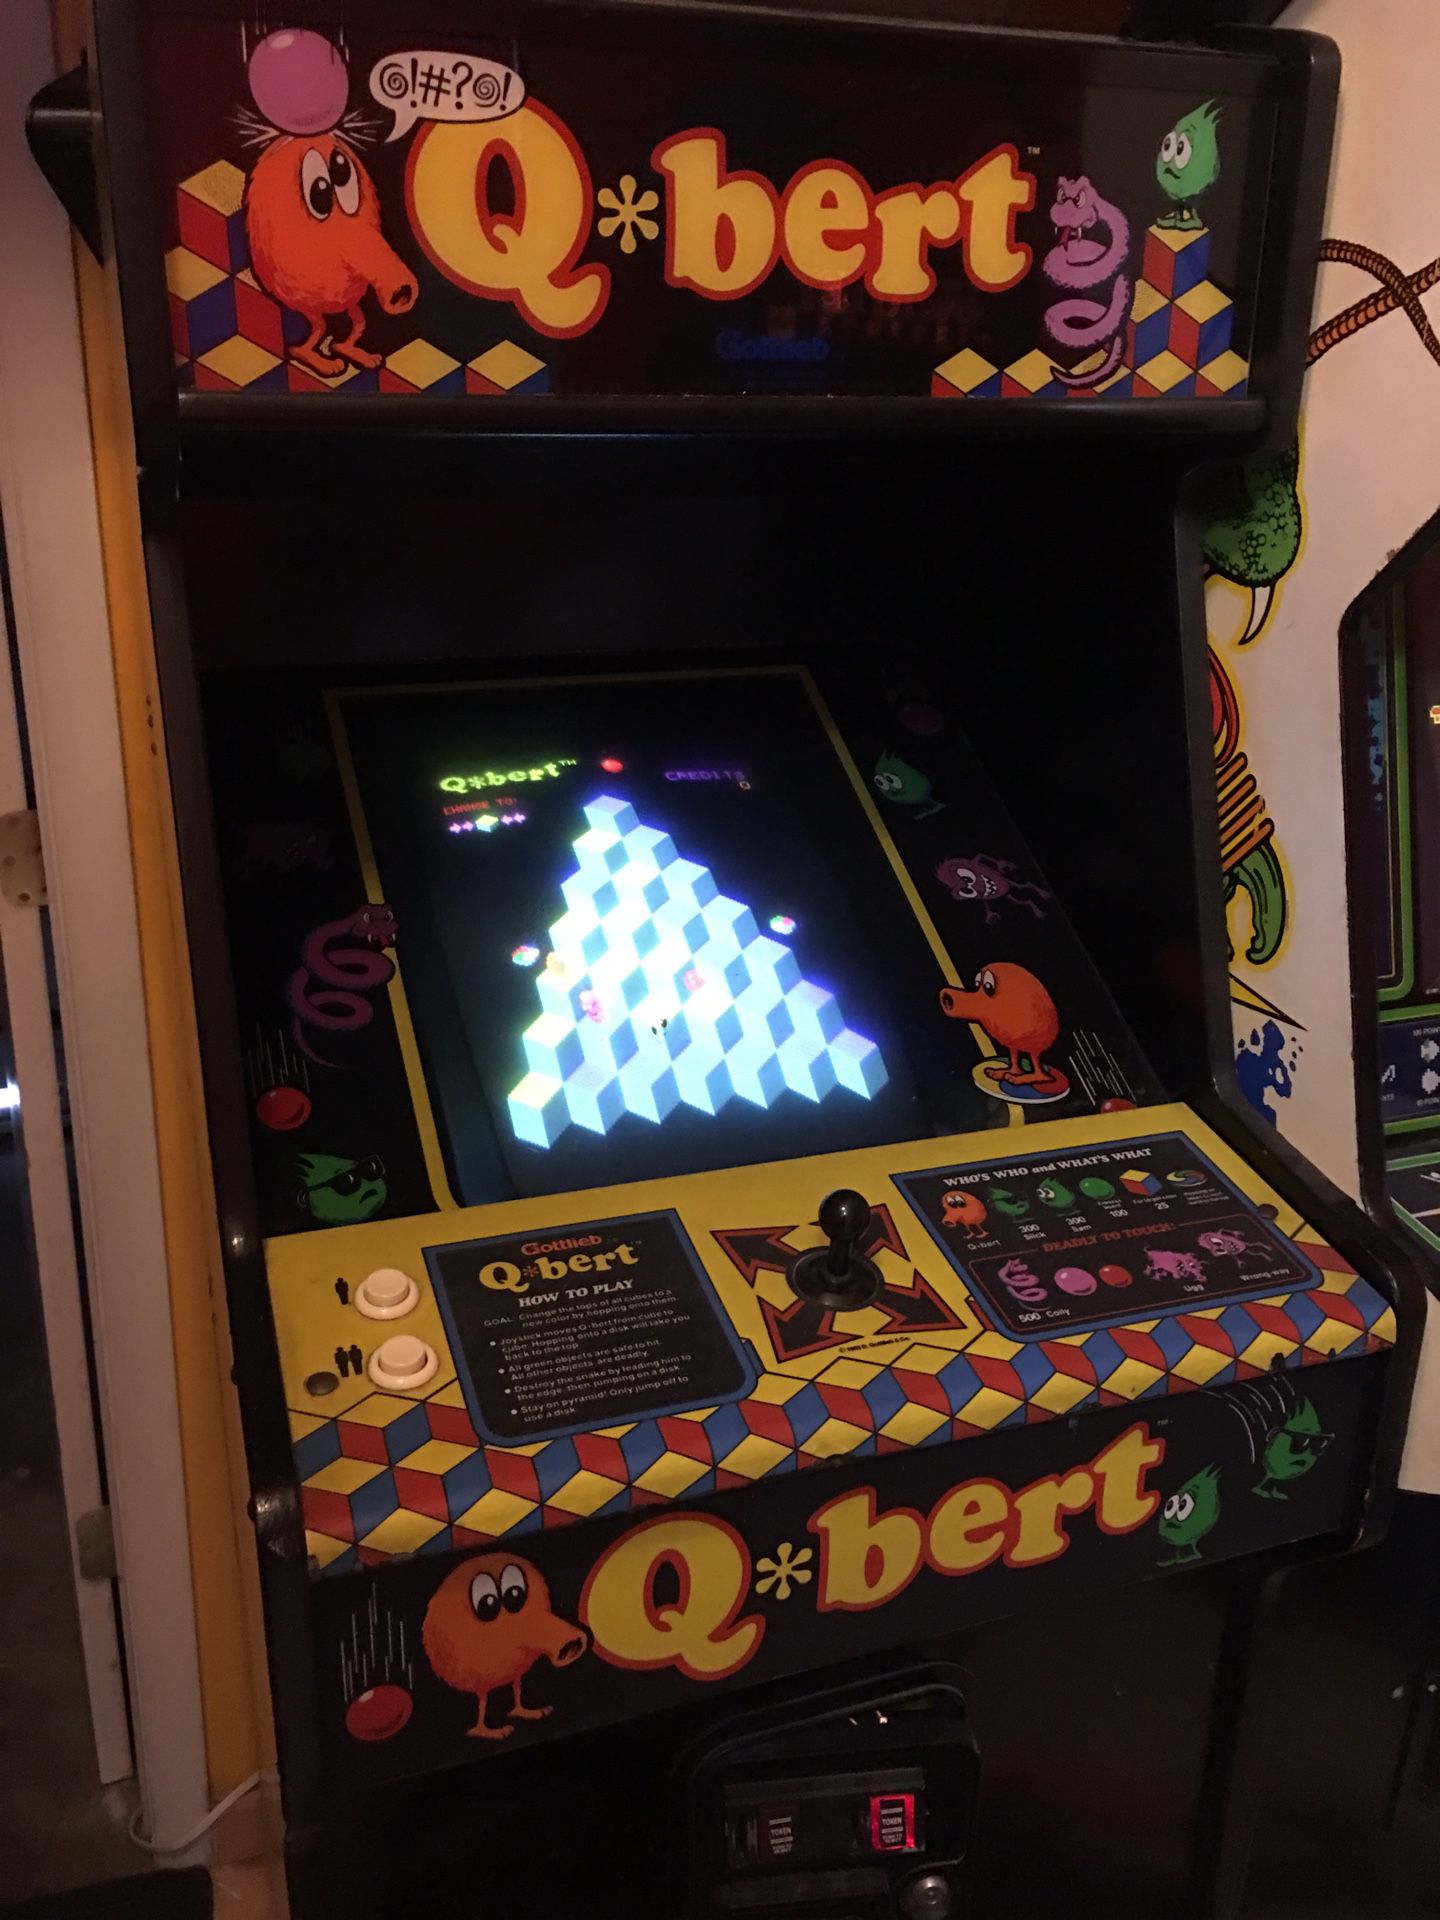 Arcade game Qbert